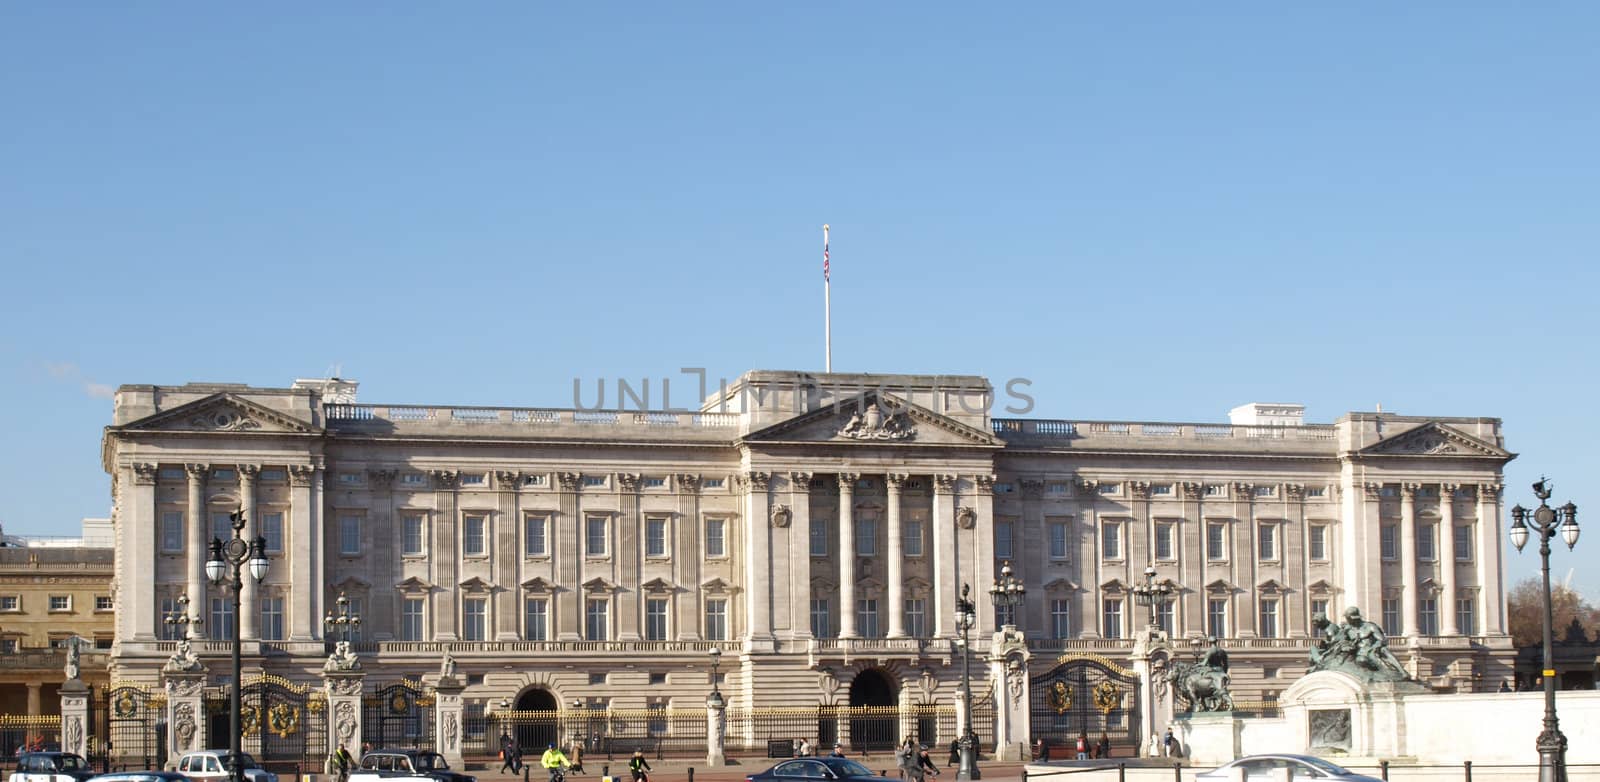 Buckingham Palace, London by claudiodivizia